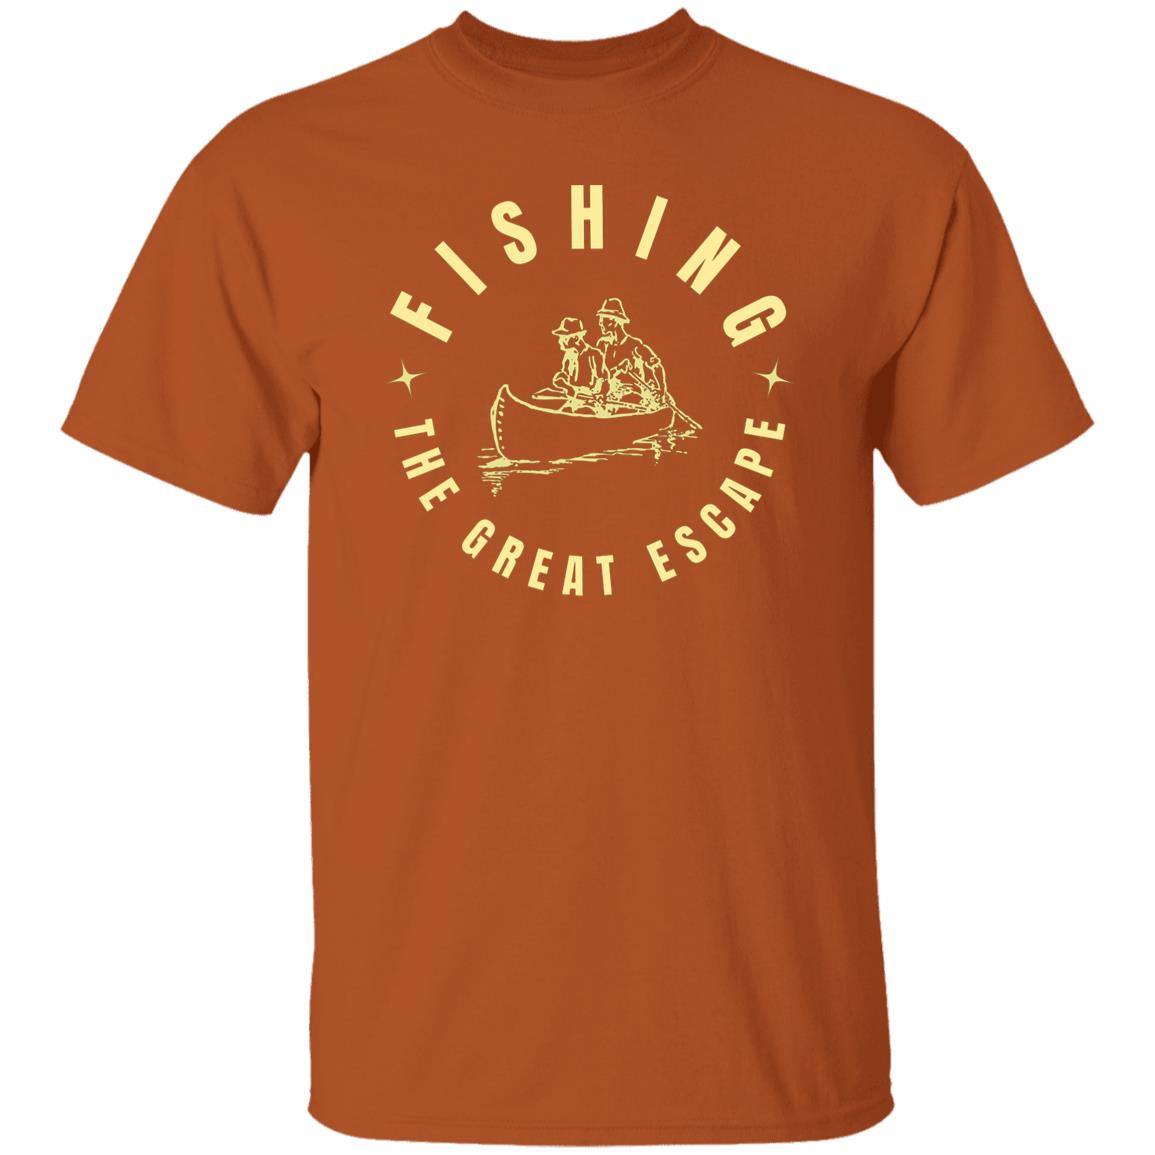 Fishing the great escape t-shirt k texas-orange